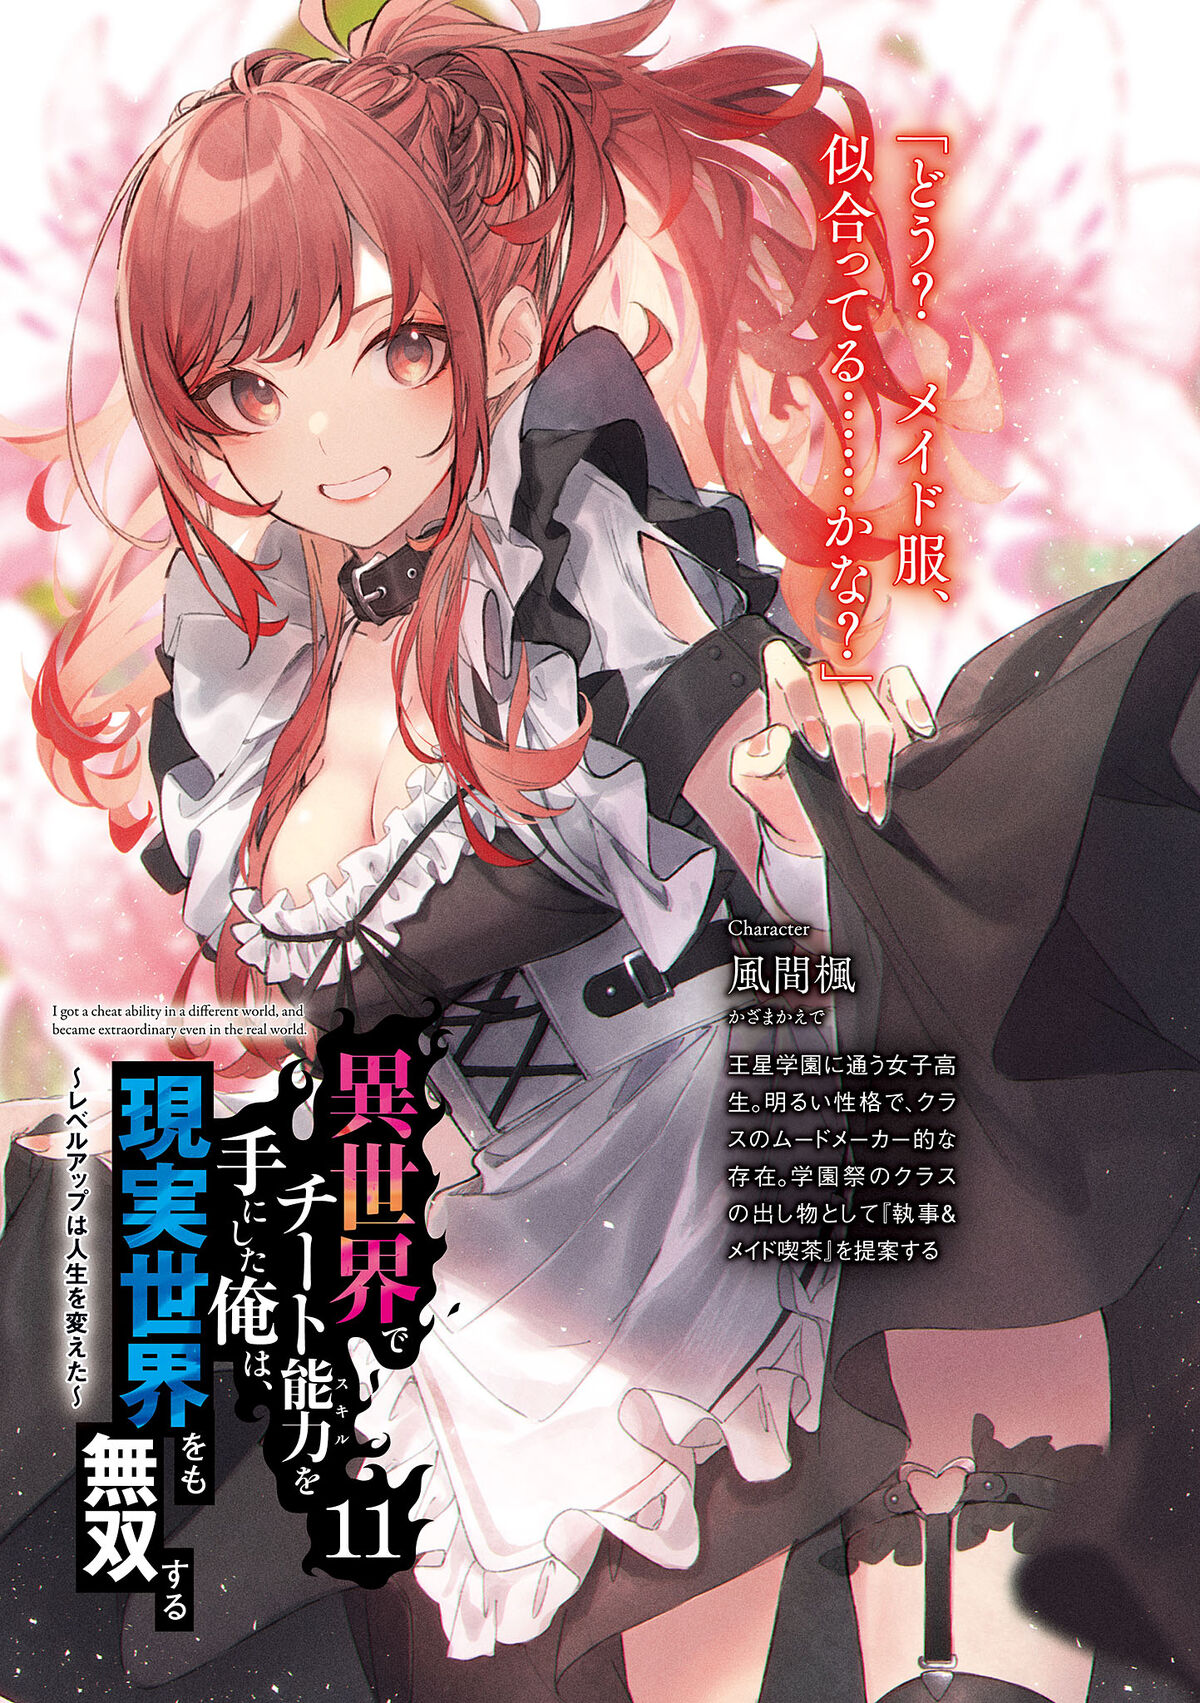 Light Novel Volume 13, Cheat Musou Wiki